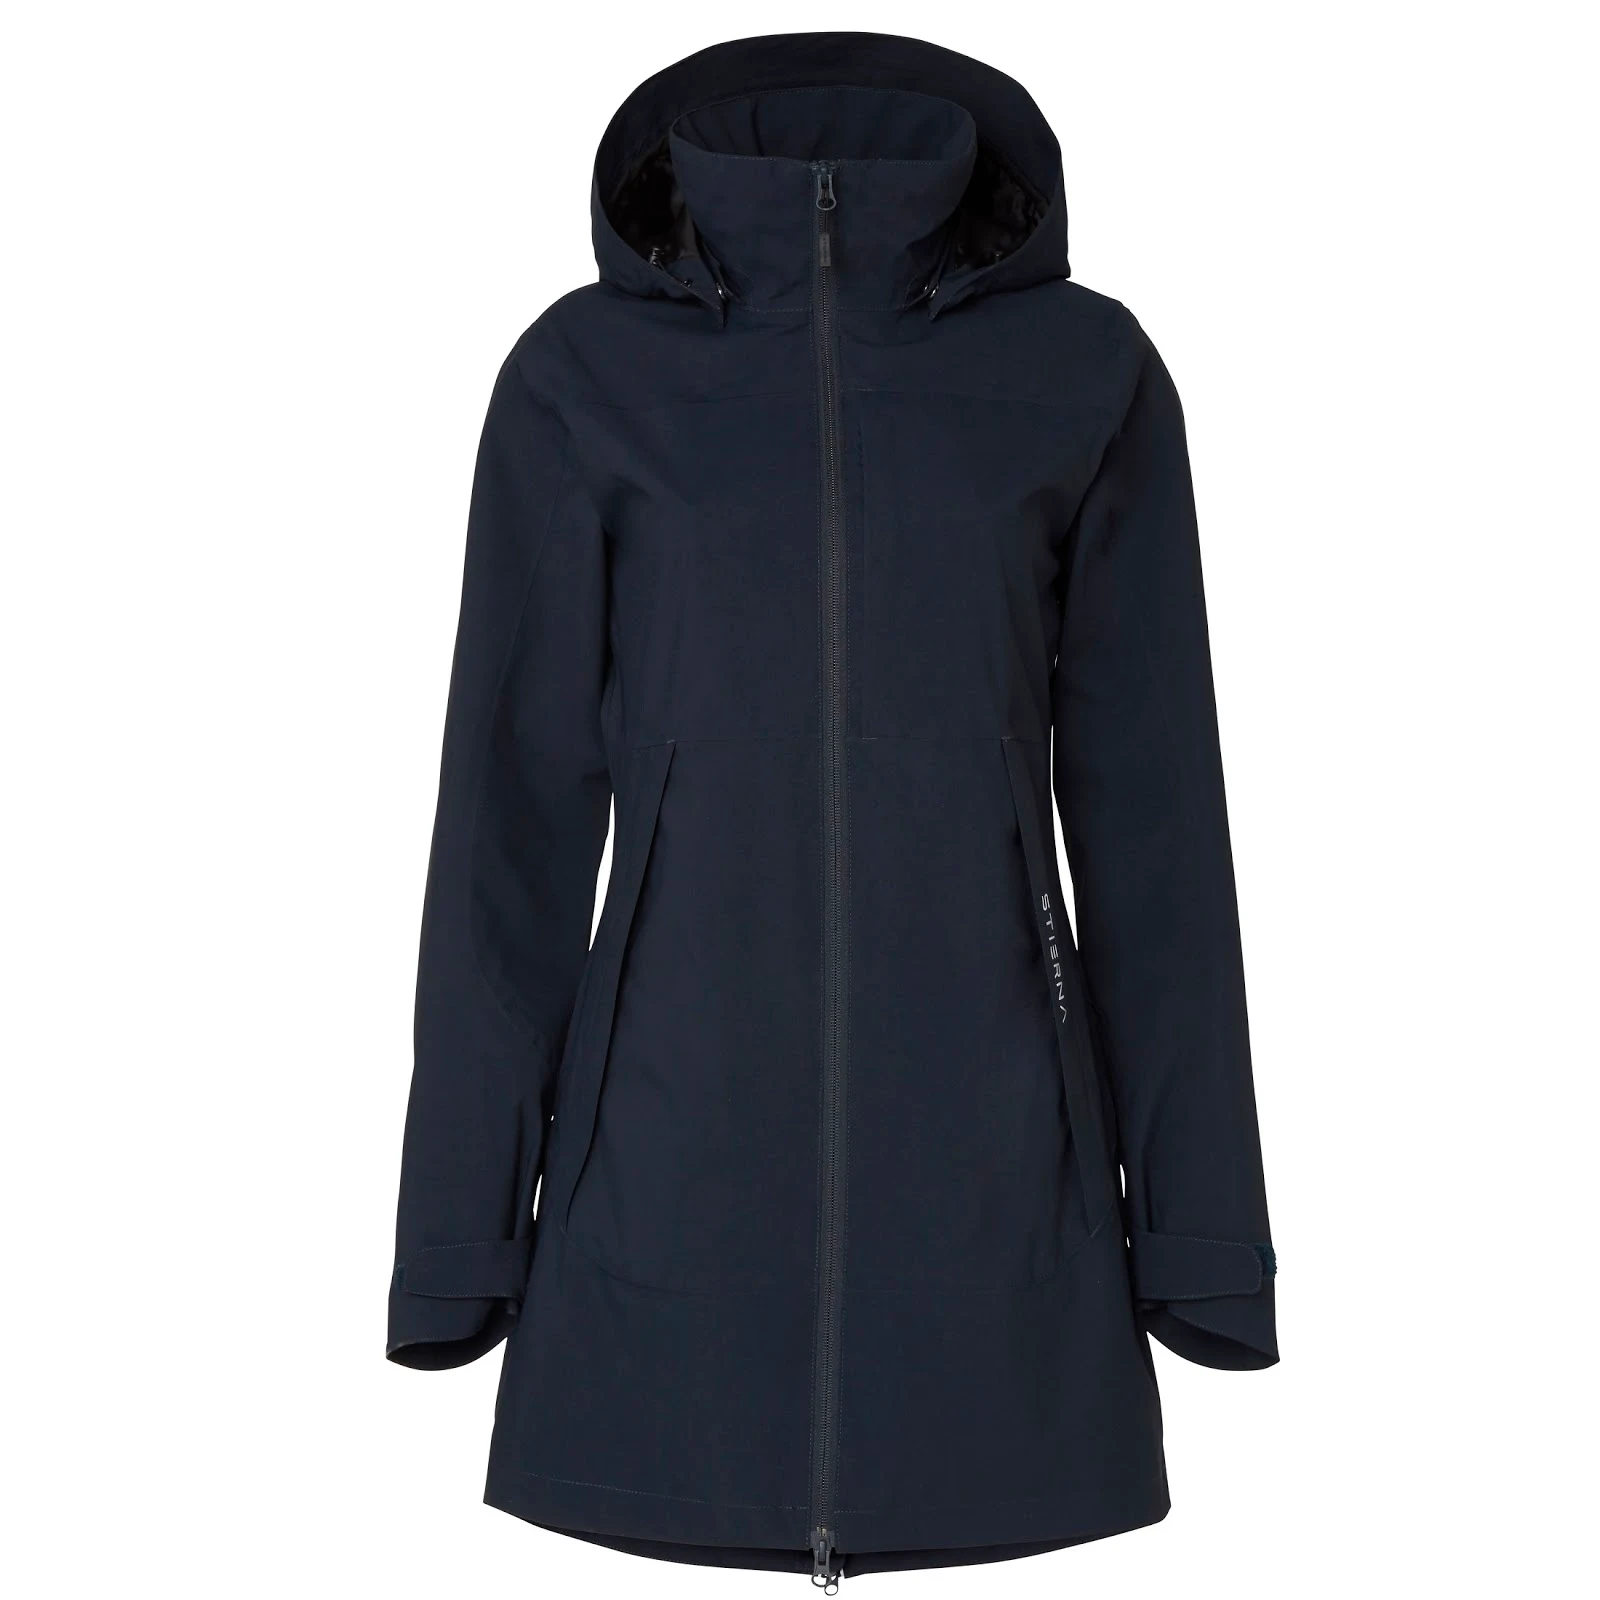 Storm Rain Coat Navy - Buy waterproof equestrian sportswear online at ...